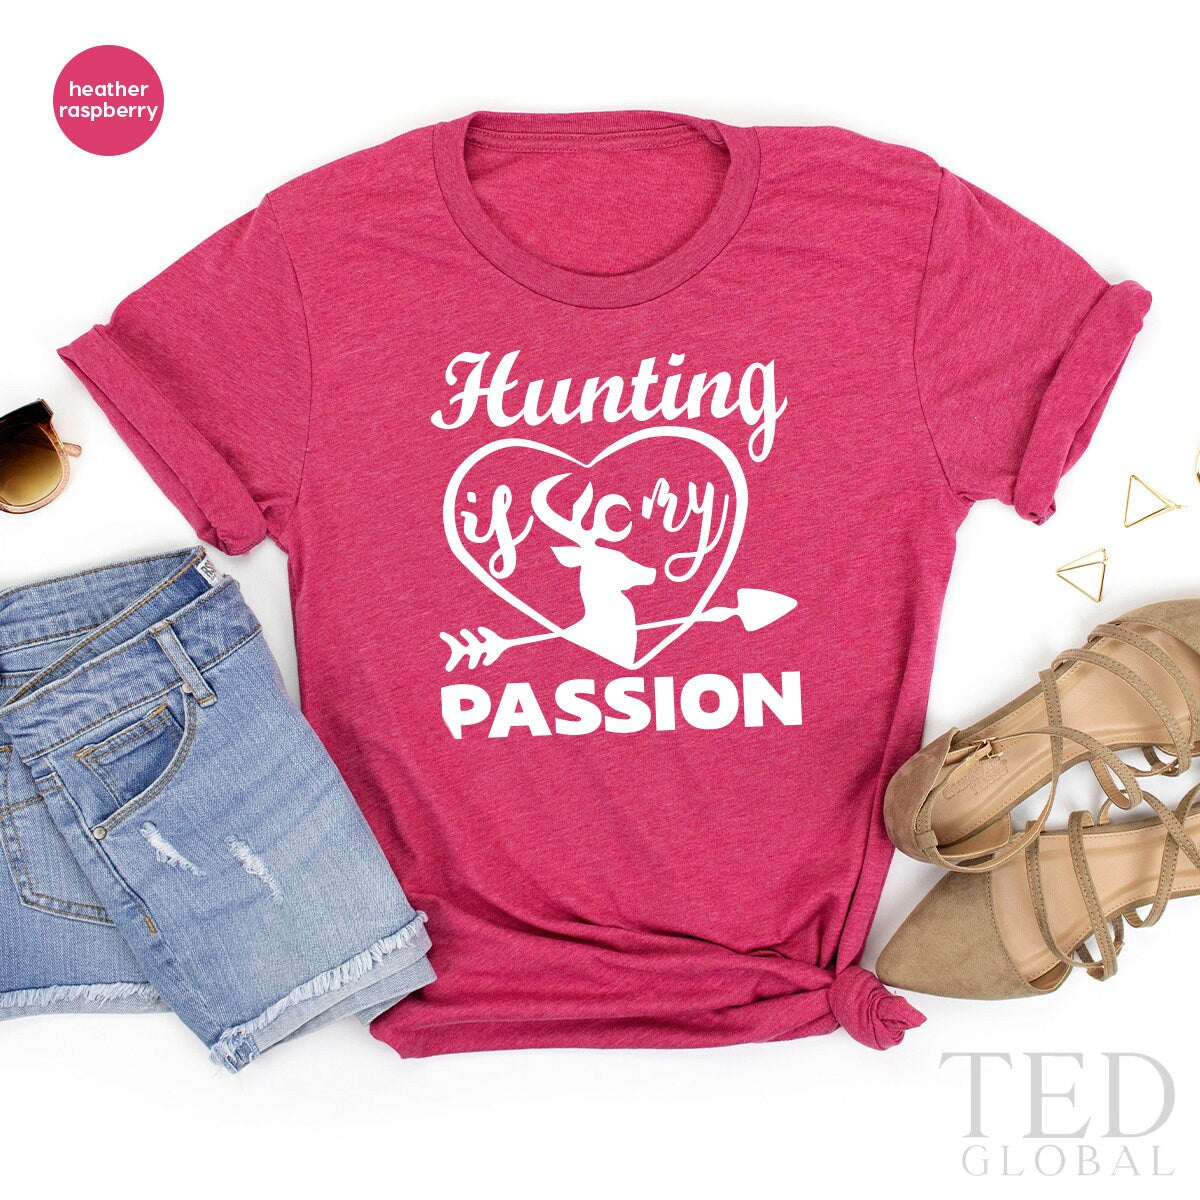 Funny Hunting T Shirt, Camping Tshirt, Gift for Hiker, Hiking Shirt, Adventure Life Shirt, Deer Hunters Men Shirt, Gift for Outdoorsy